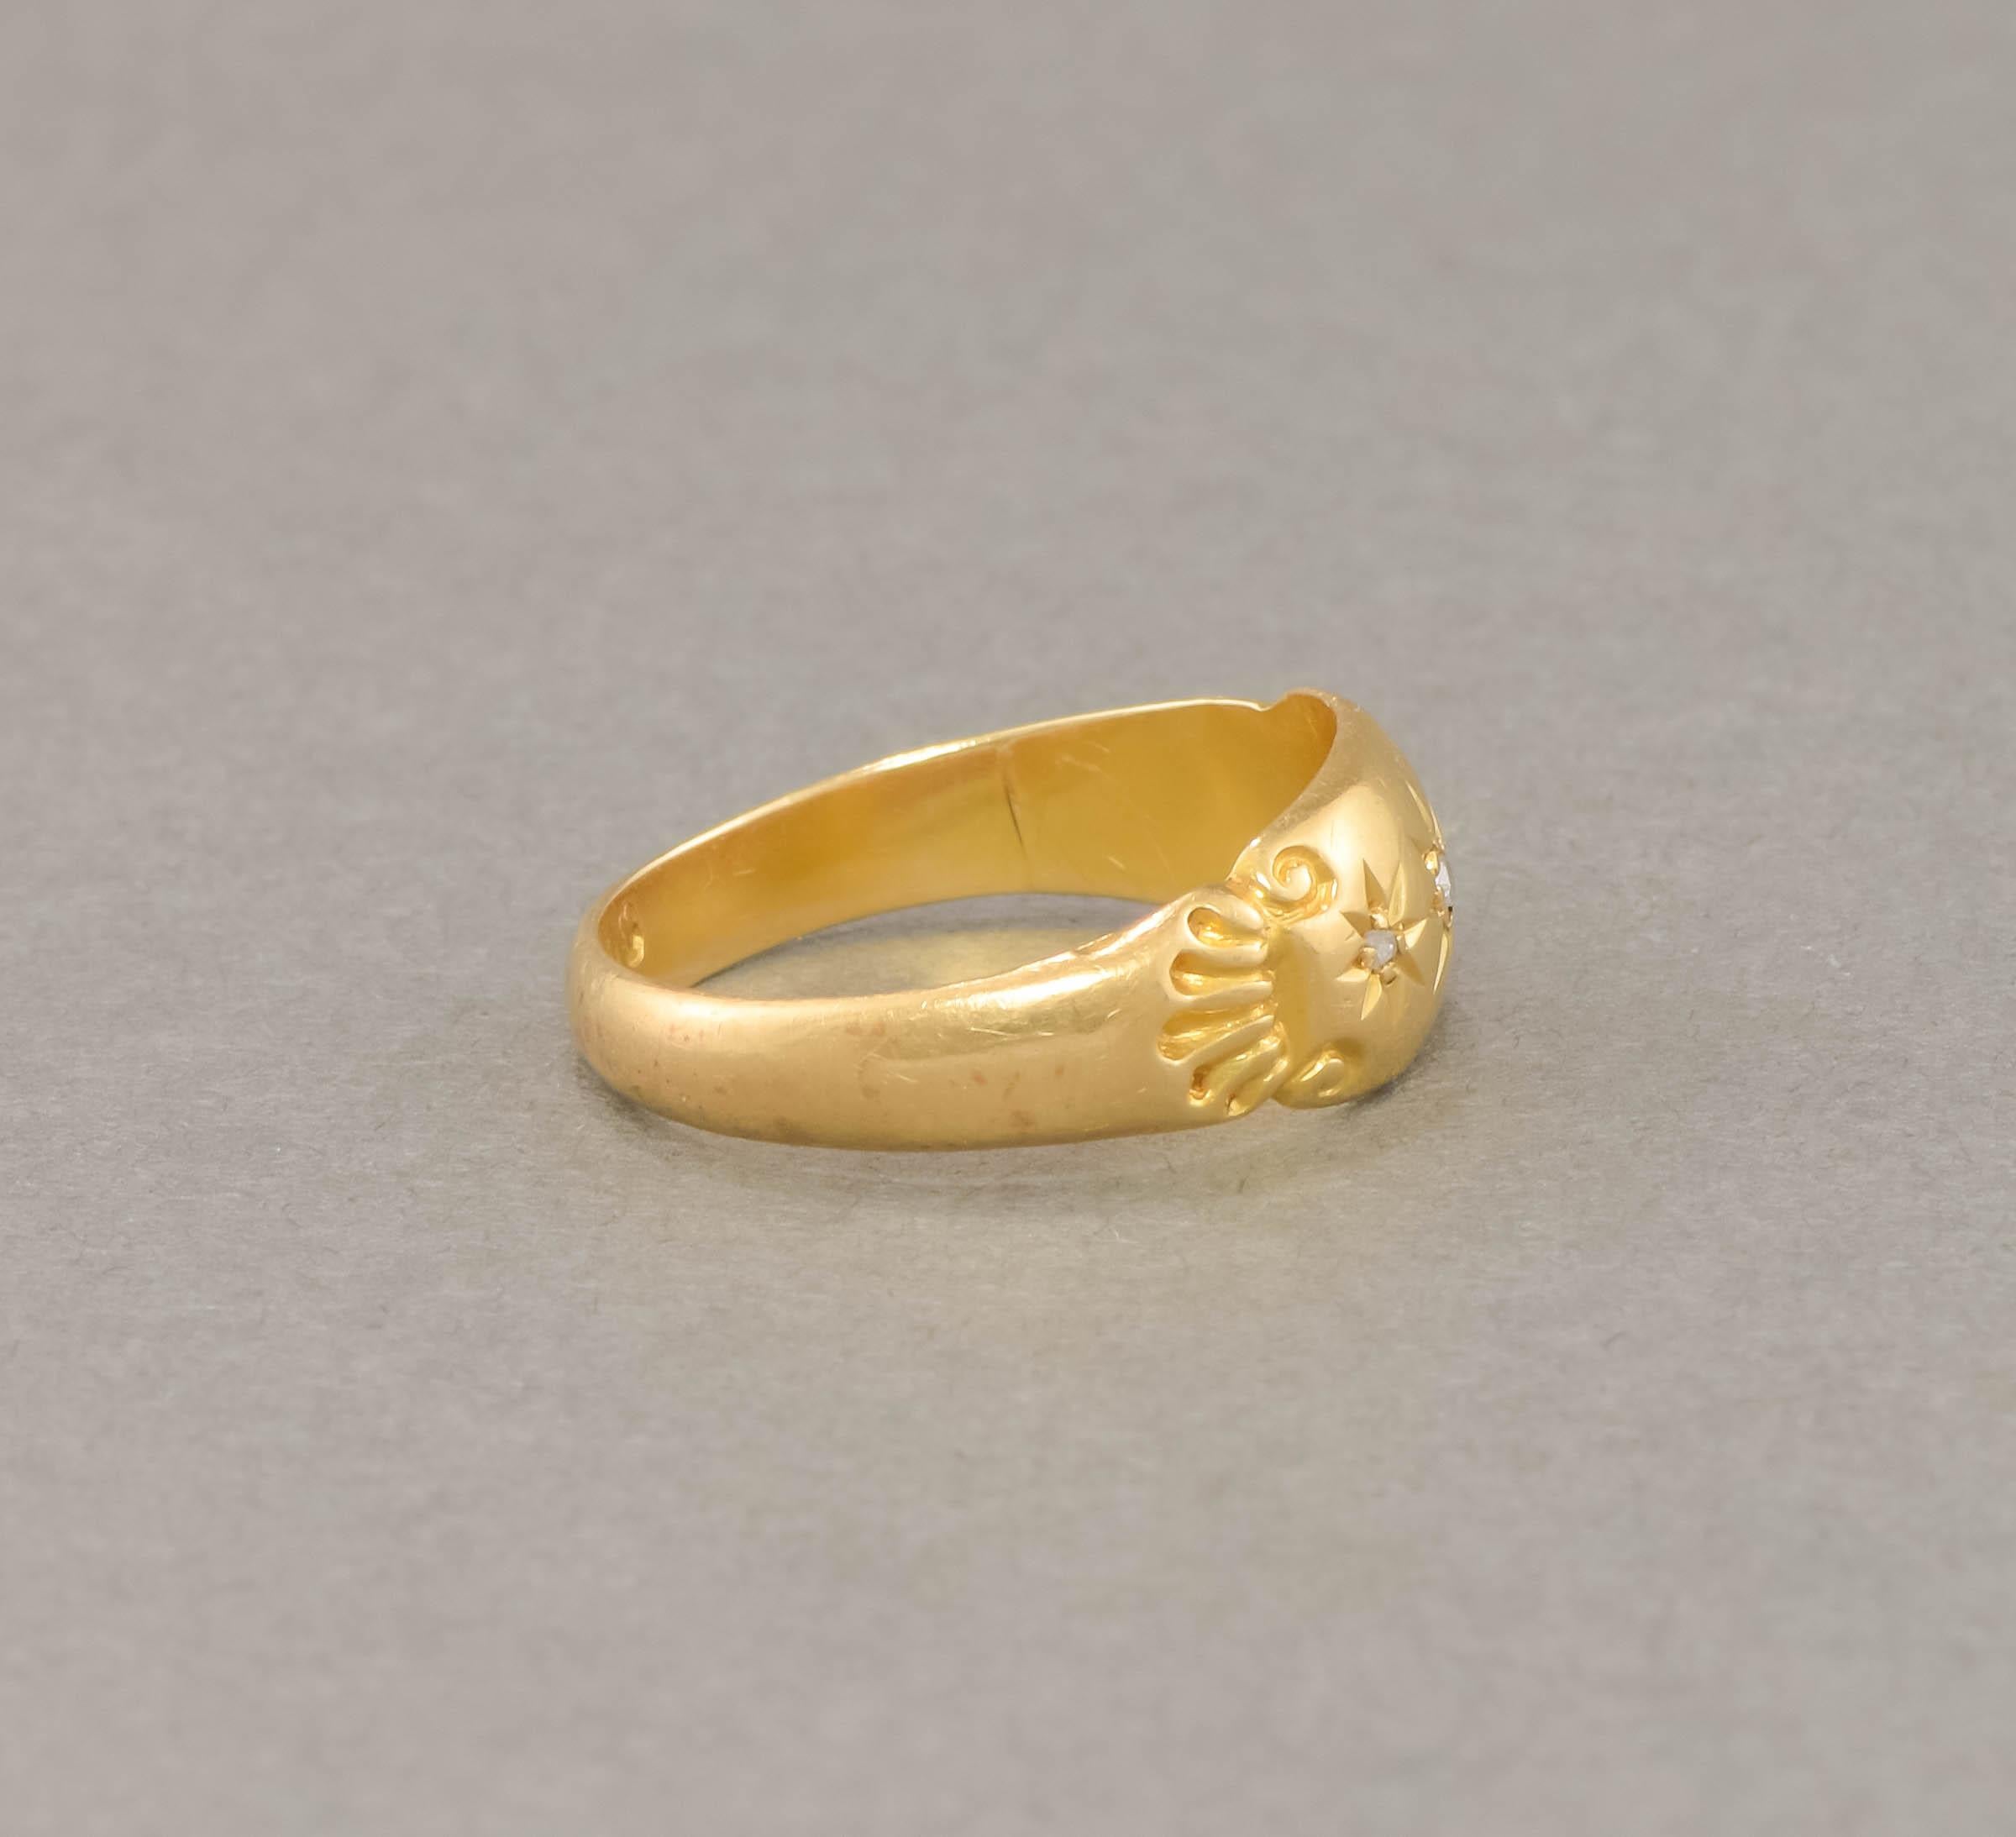 Edwardian 18K Gold Diamond Band Ring, Hallmarked Chester 1910 - 1911 5